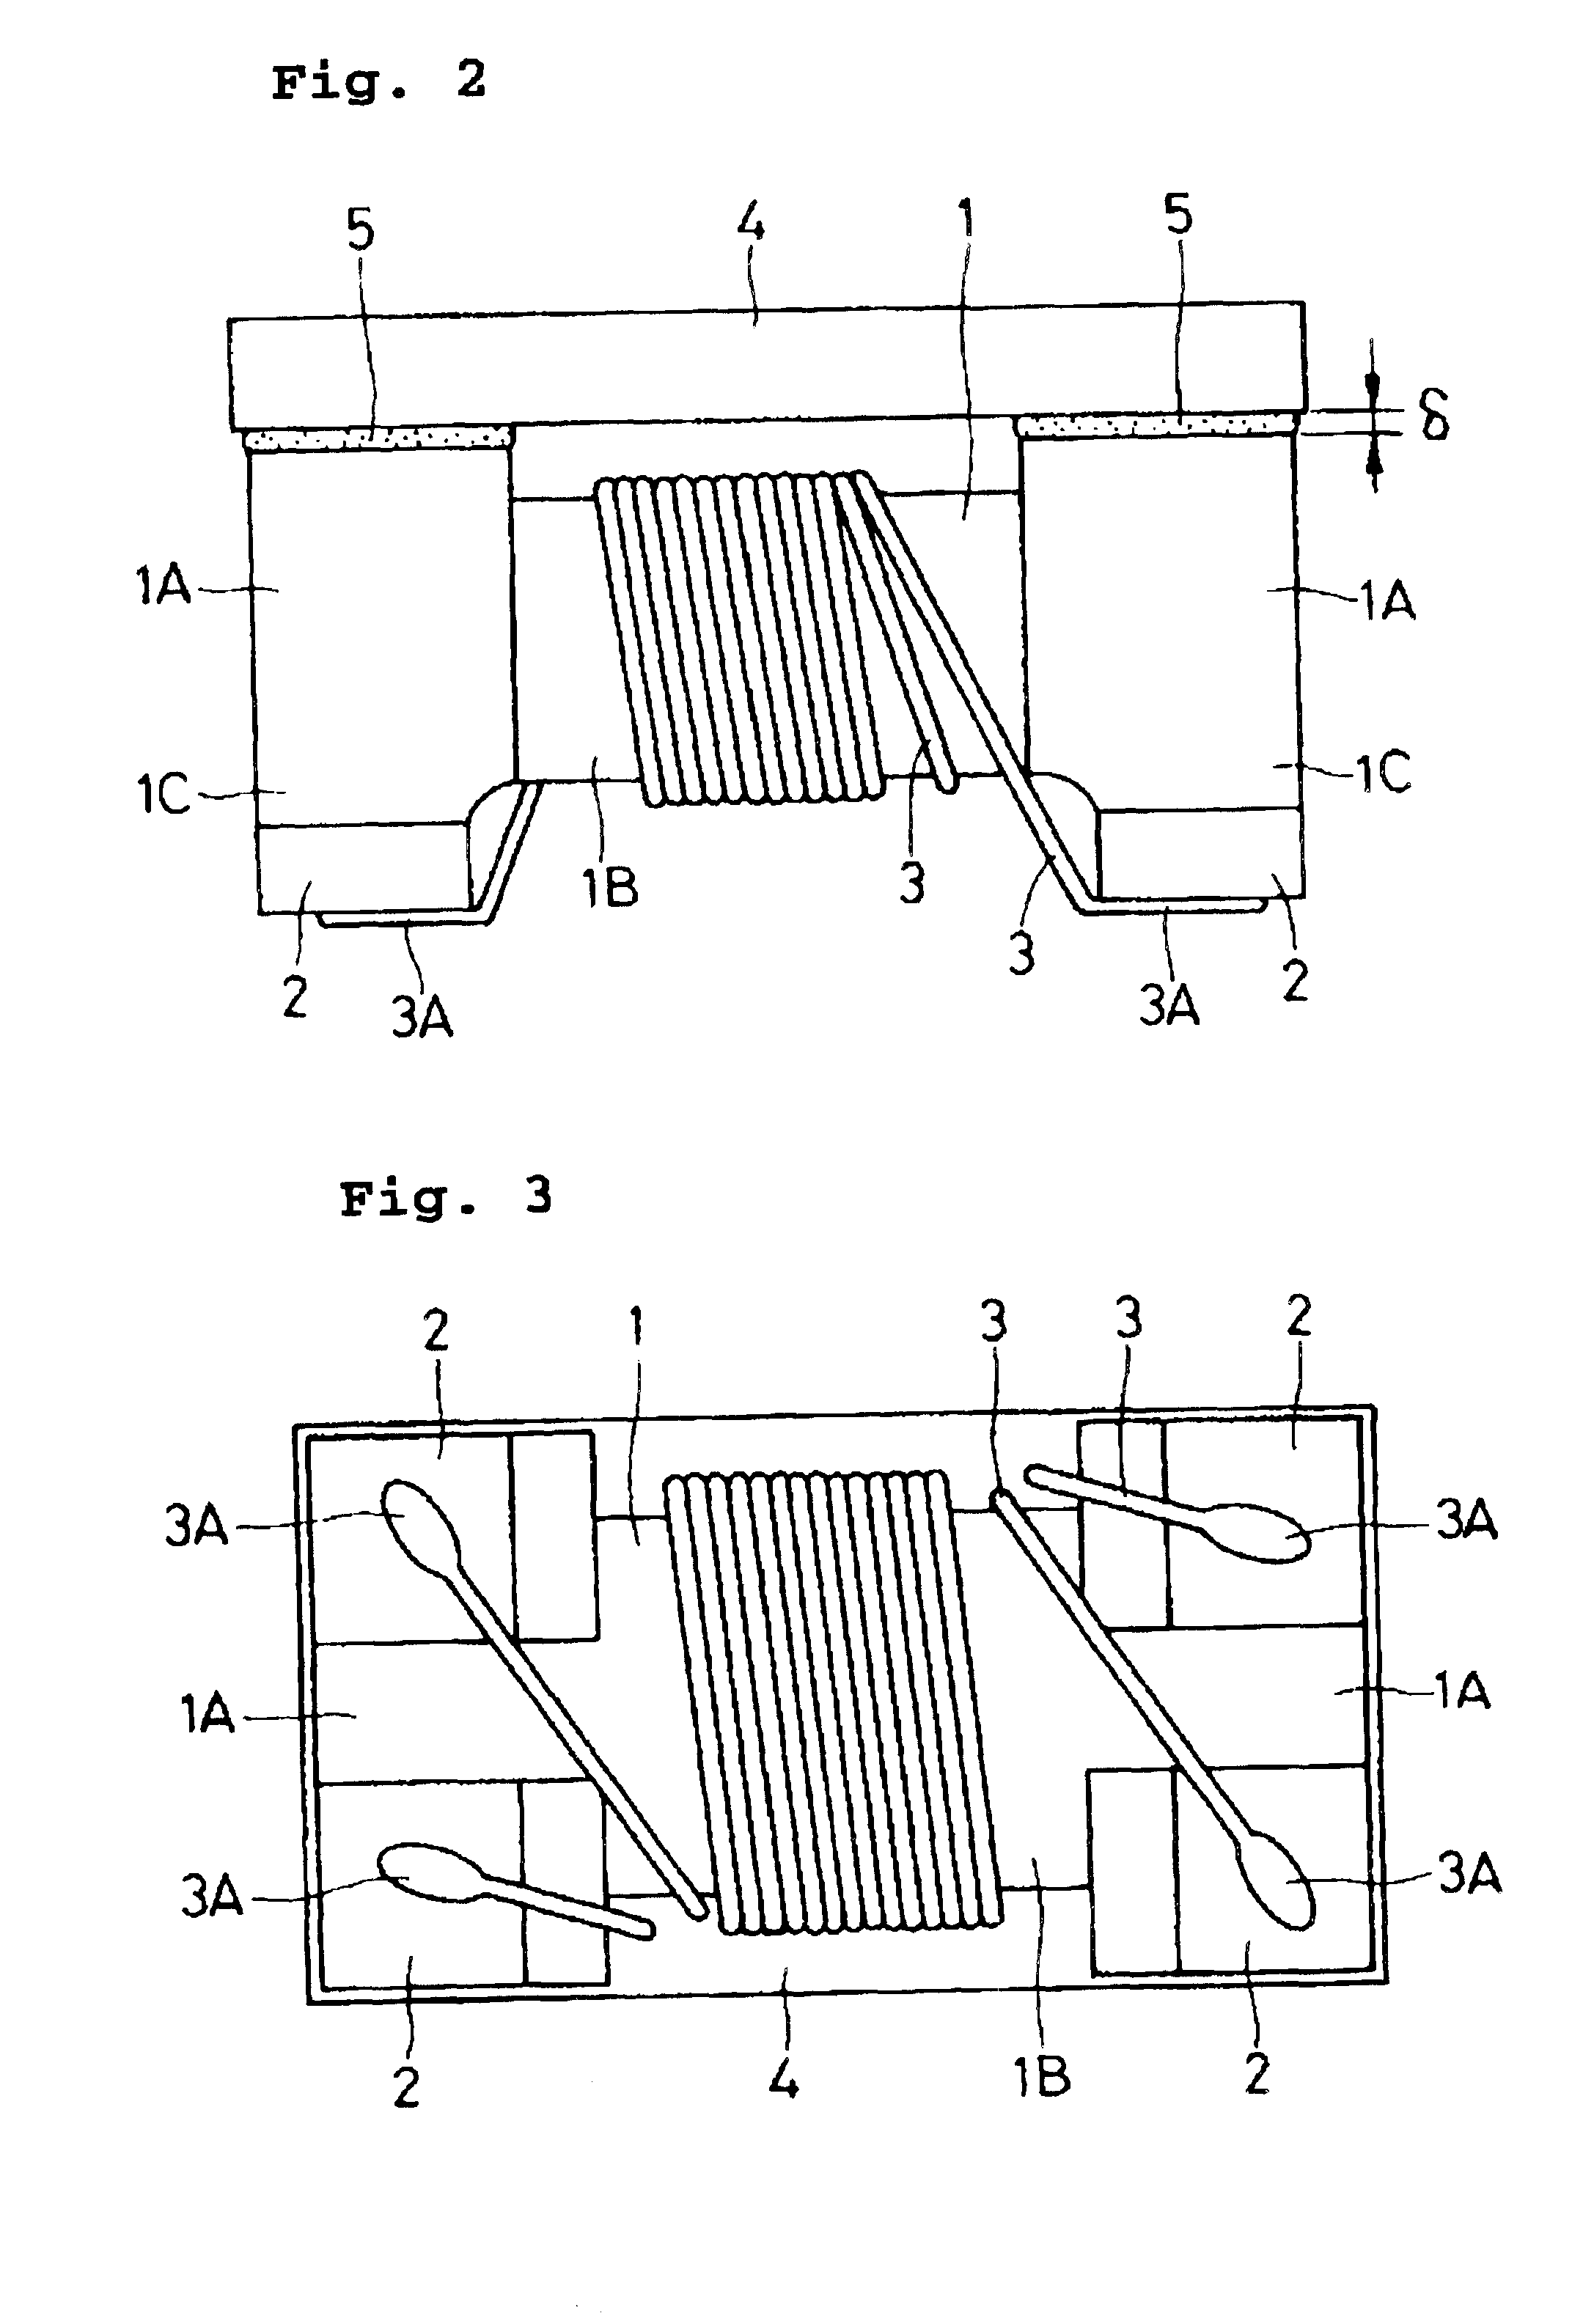 Common-mode choke coil